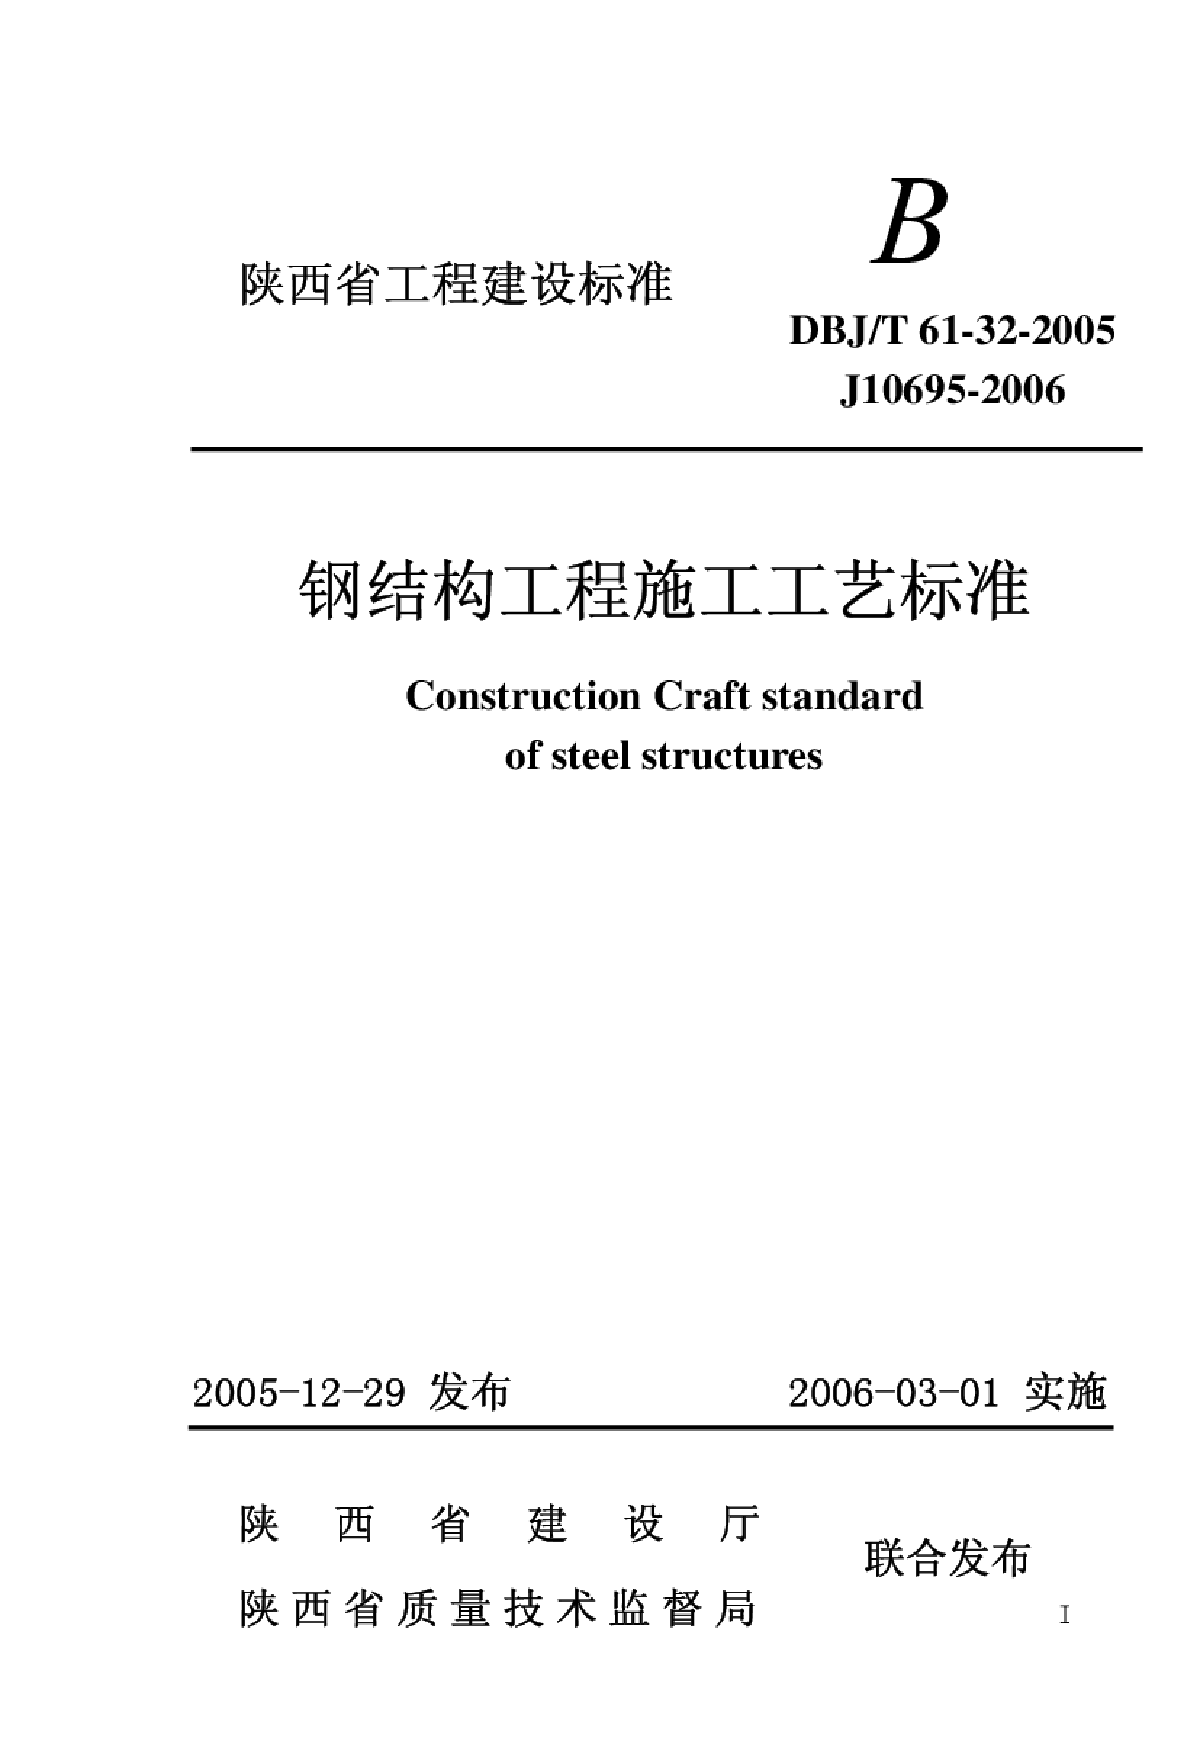 DBJT 61-32-2005 钢结构工程施工工艺标准-图一